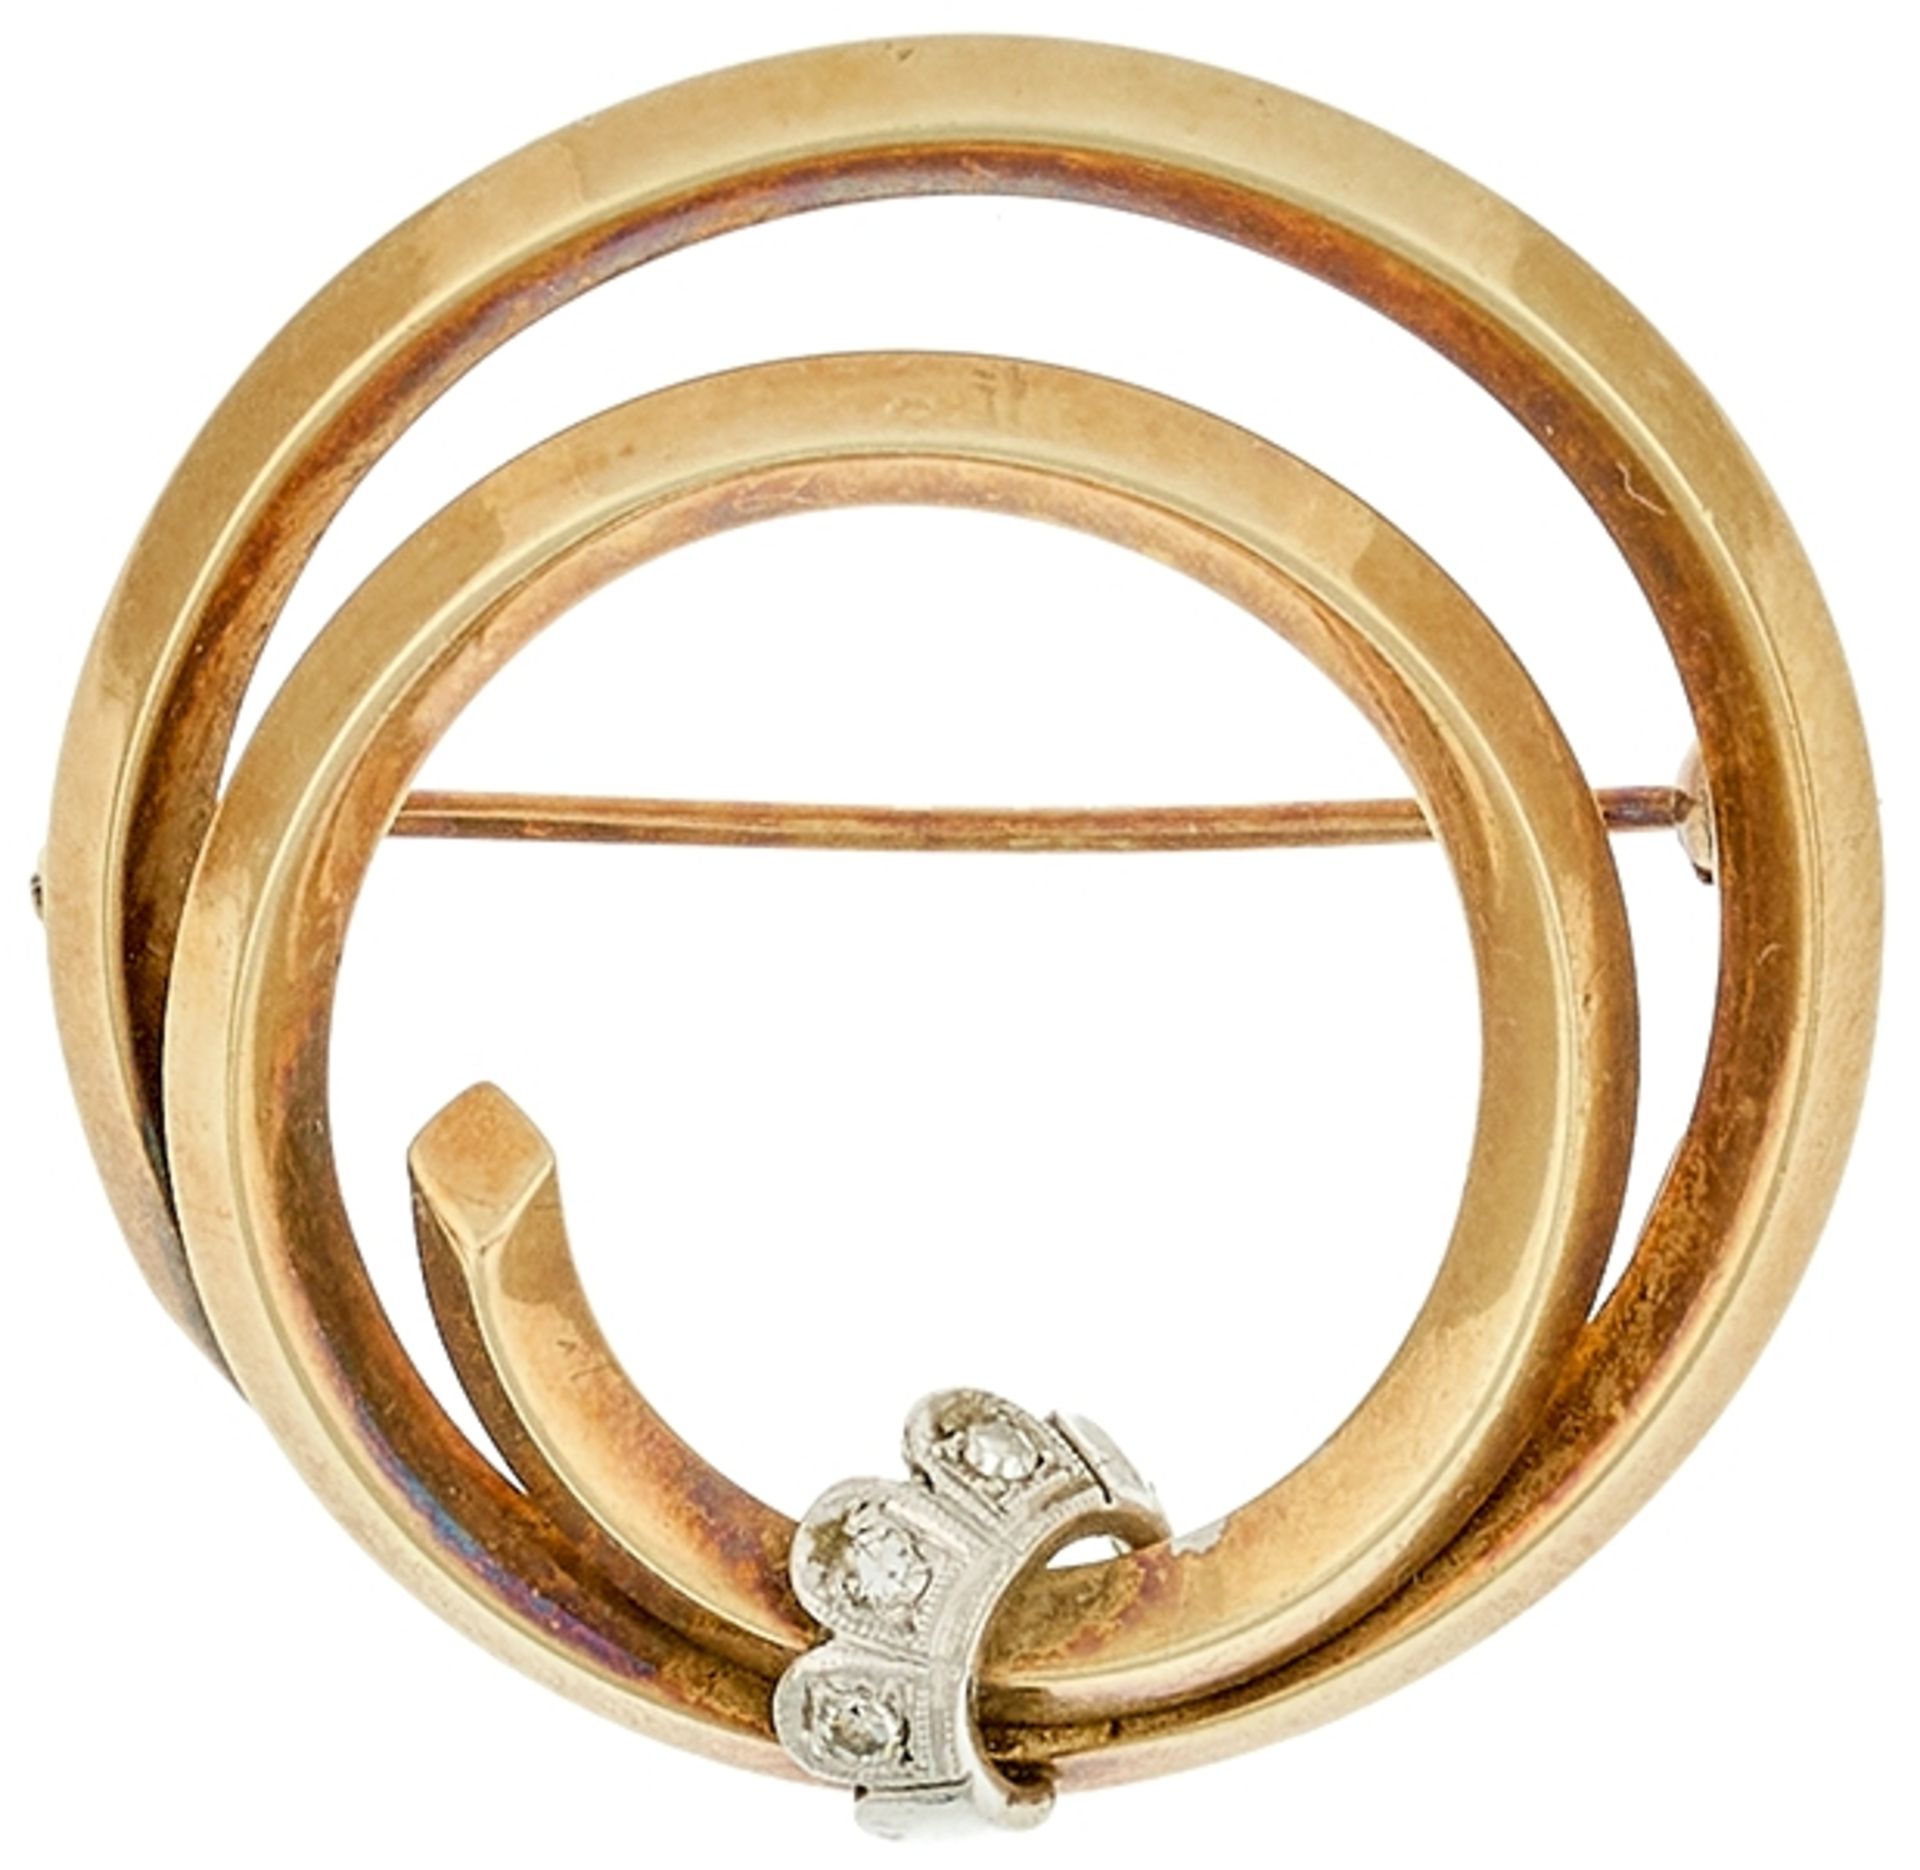 Spirally brooch with brilliant diamond tiara, 585 yellow-gold, brilliant-cut diamonds together